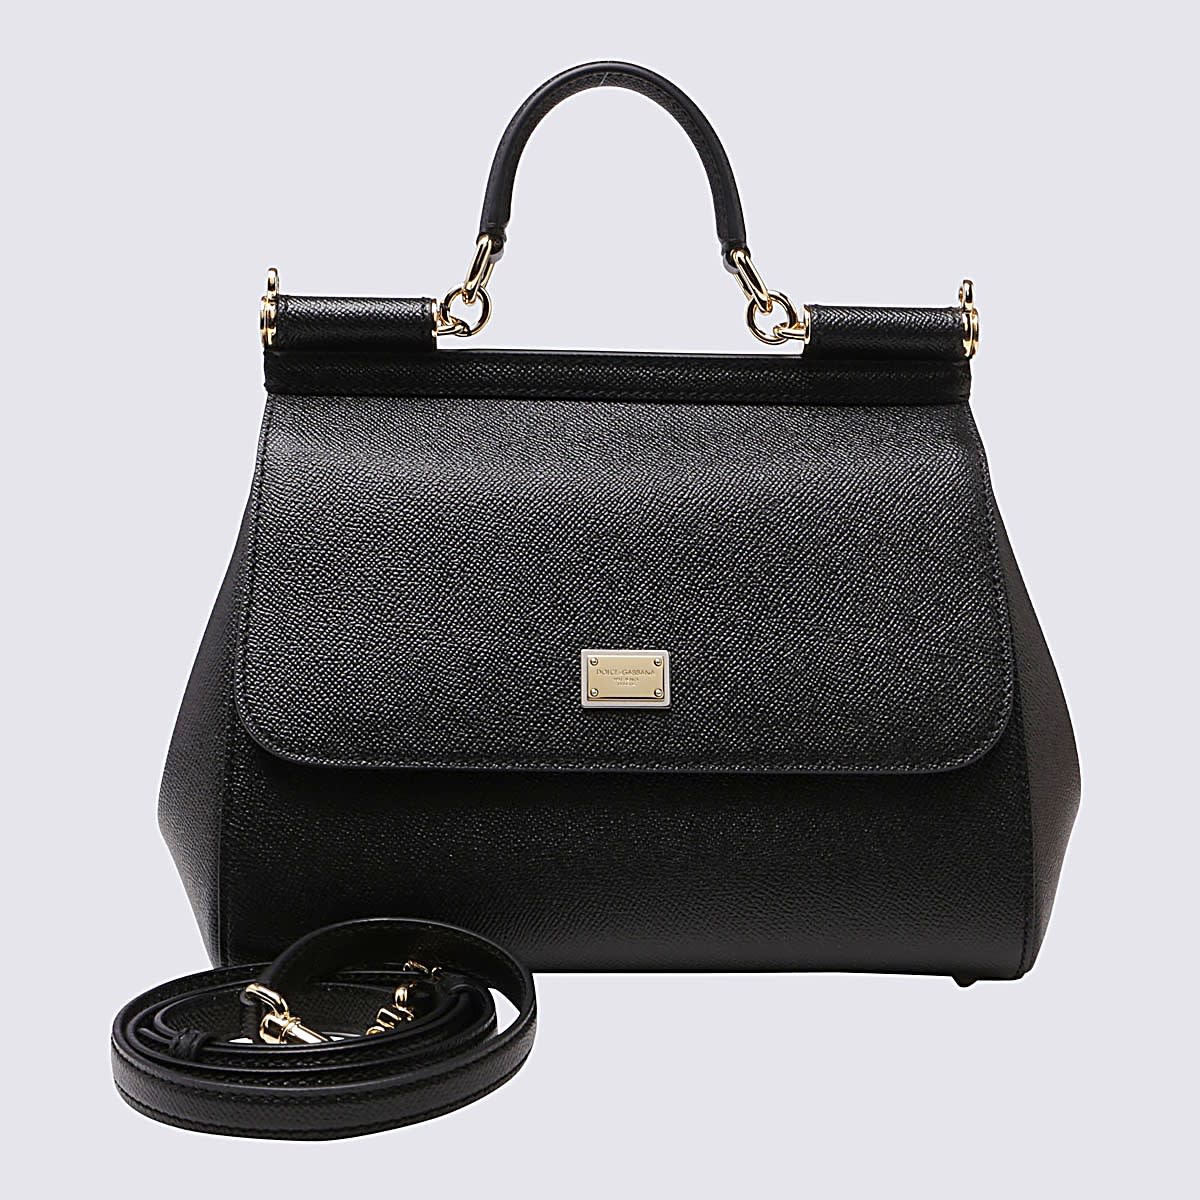 Dolce & Gabbana Black Leather Sicily Handle Bag